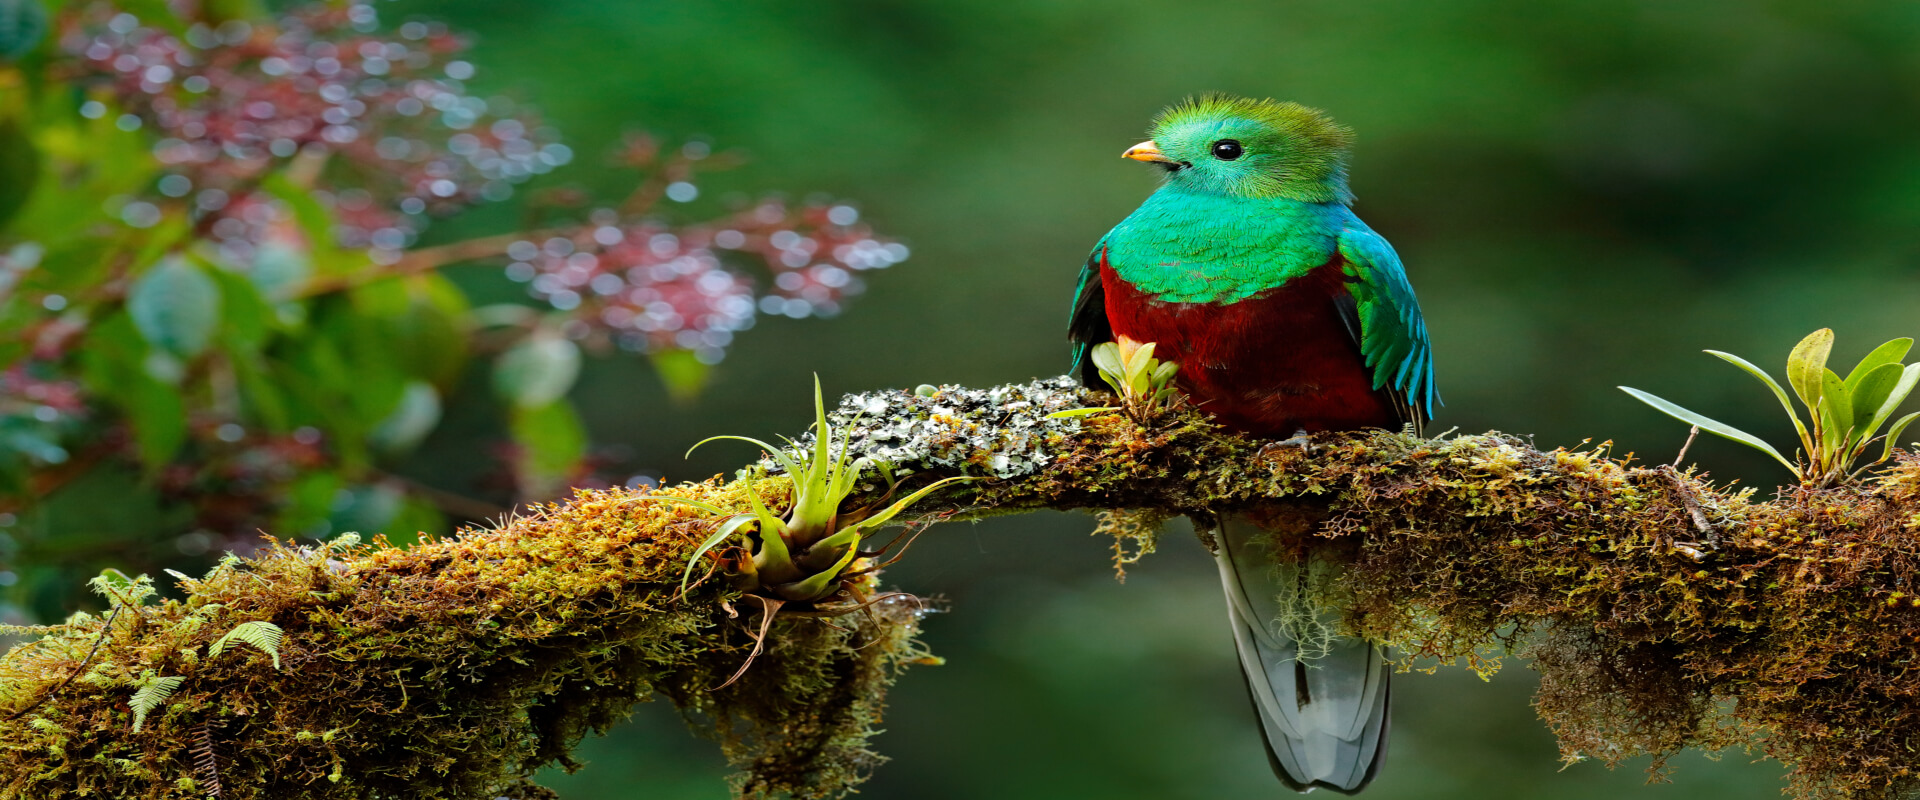 Monteverde Cloud Forest Biological Reserve Birdwatching Tour | Costa Rica Jade Tours